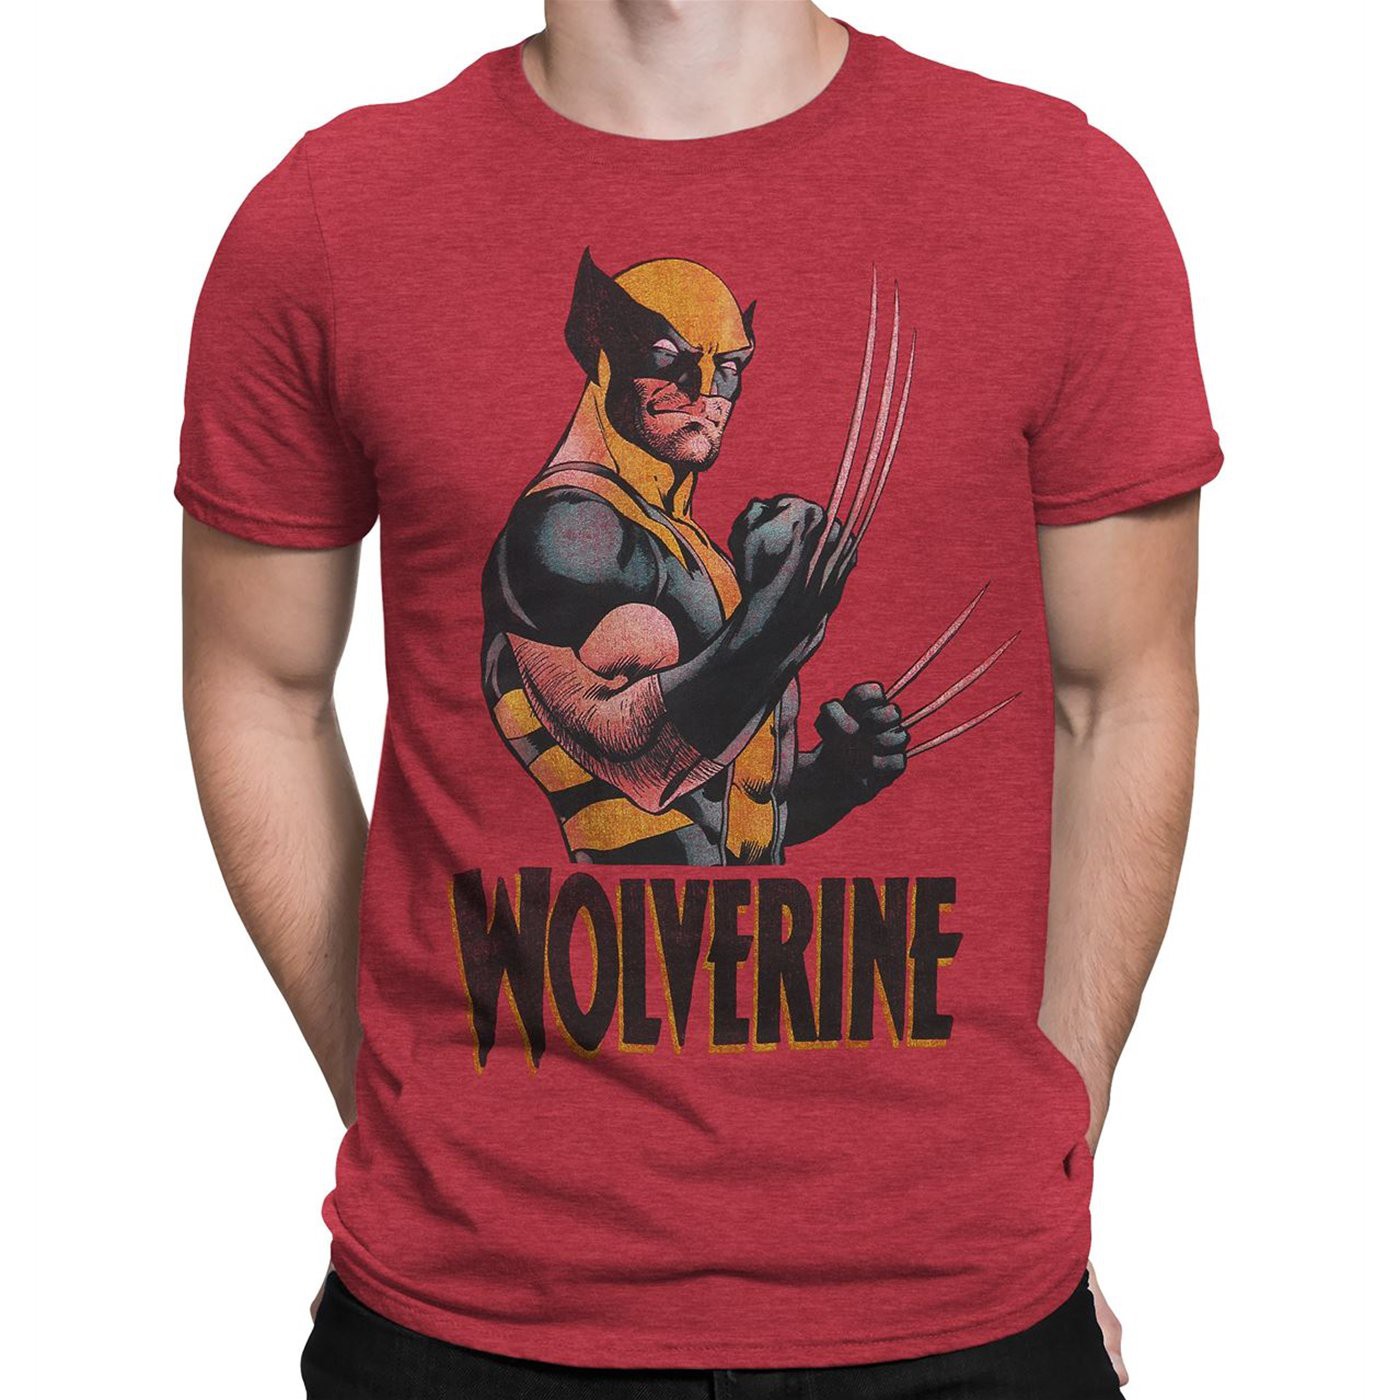 Wolverine Hey Bub! Men's T-Shirt